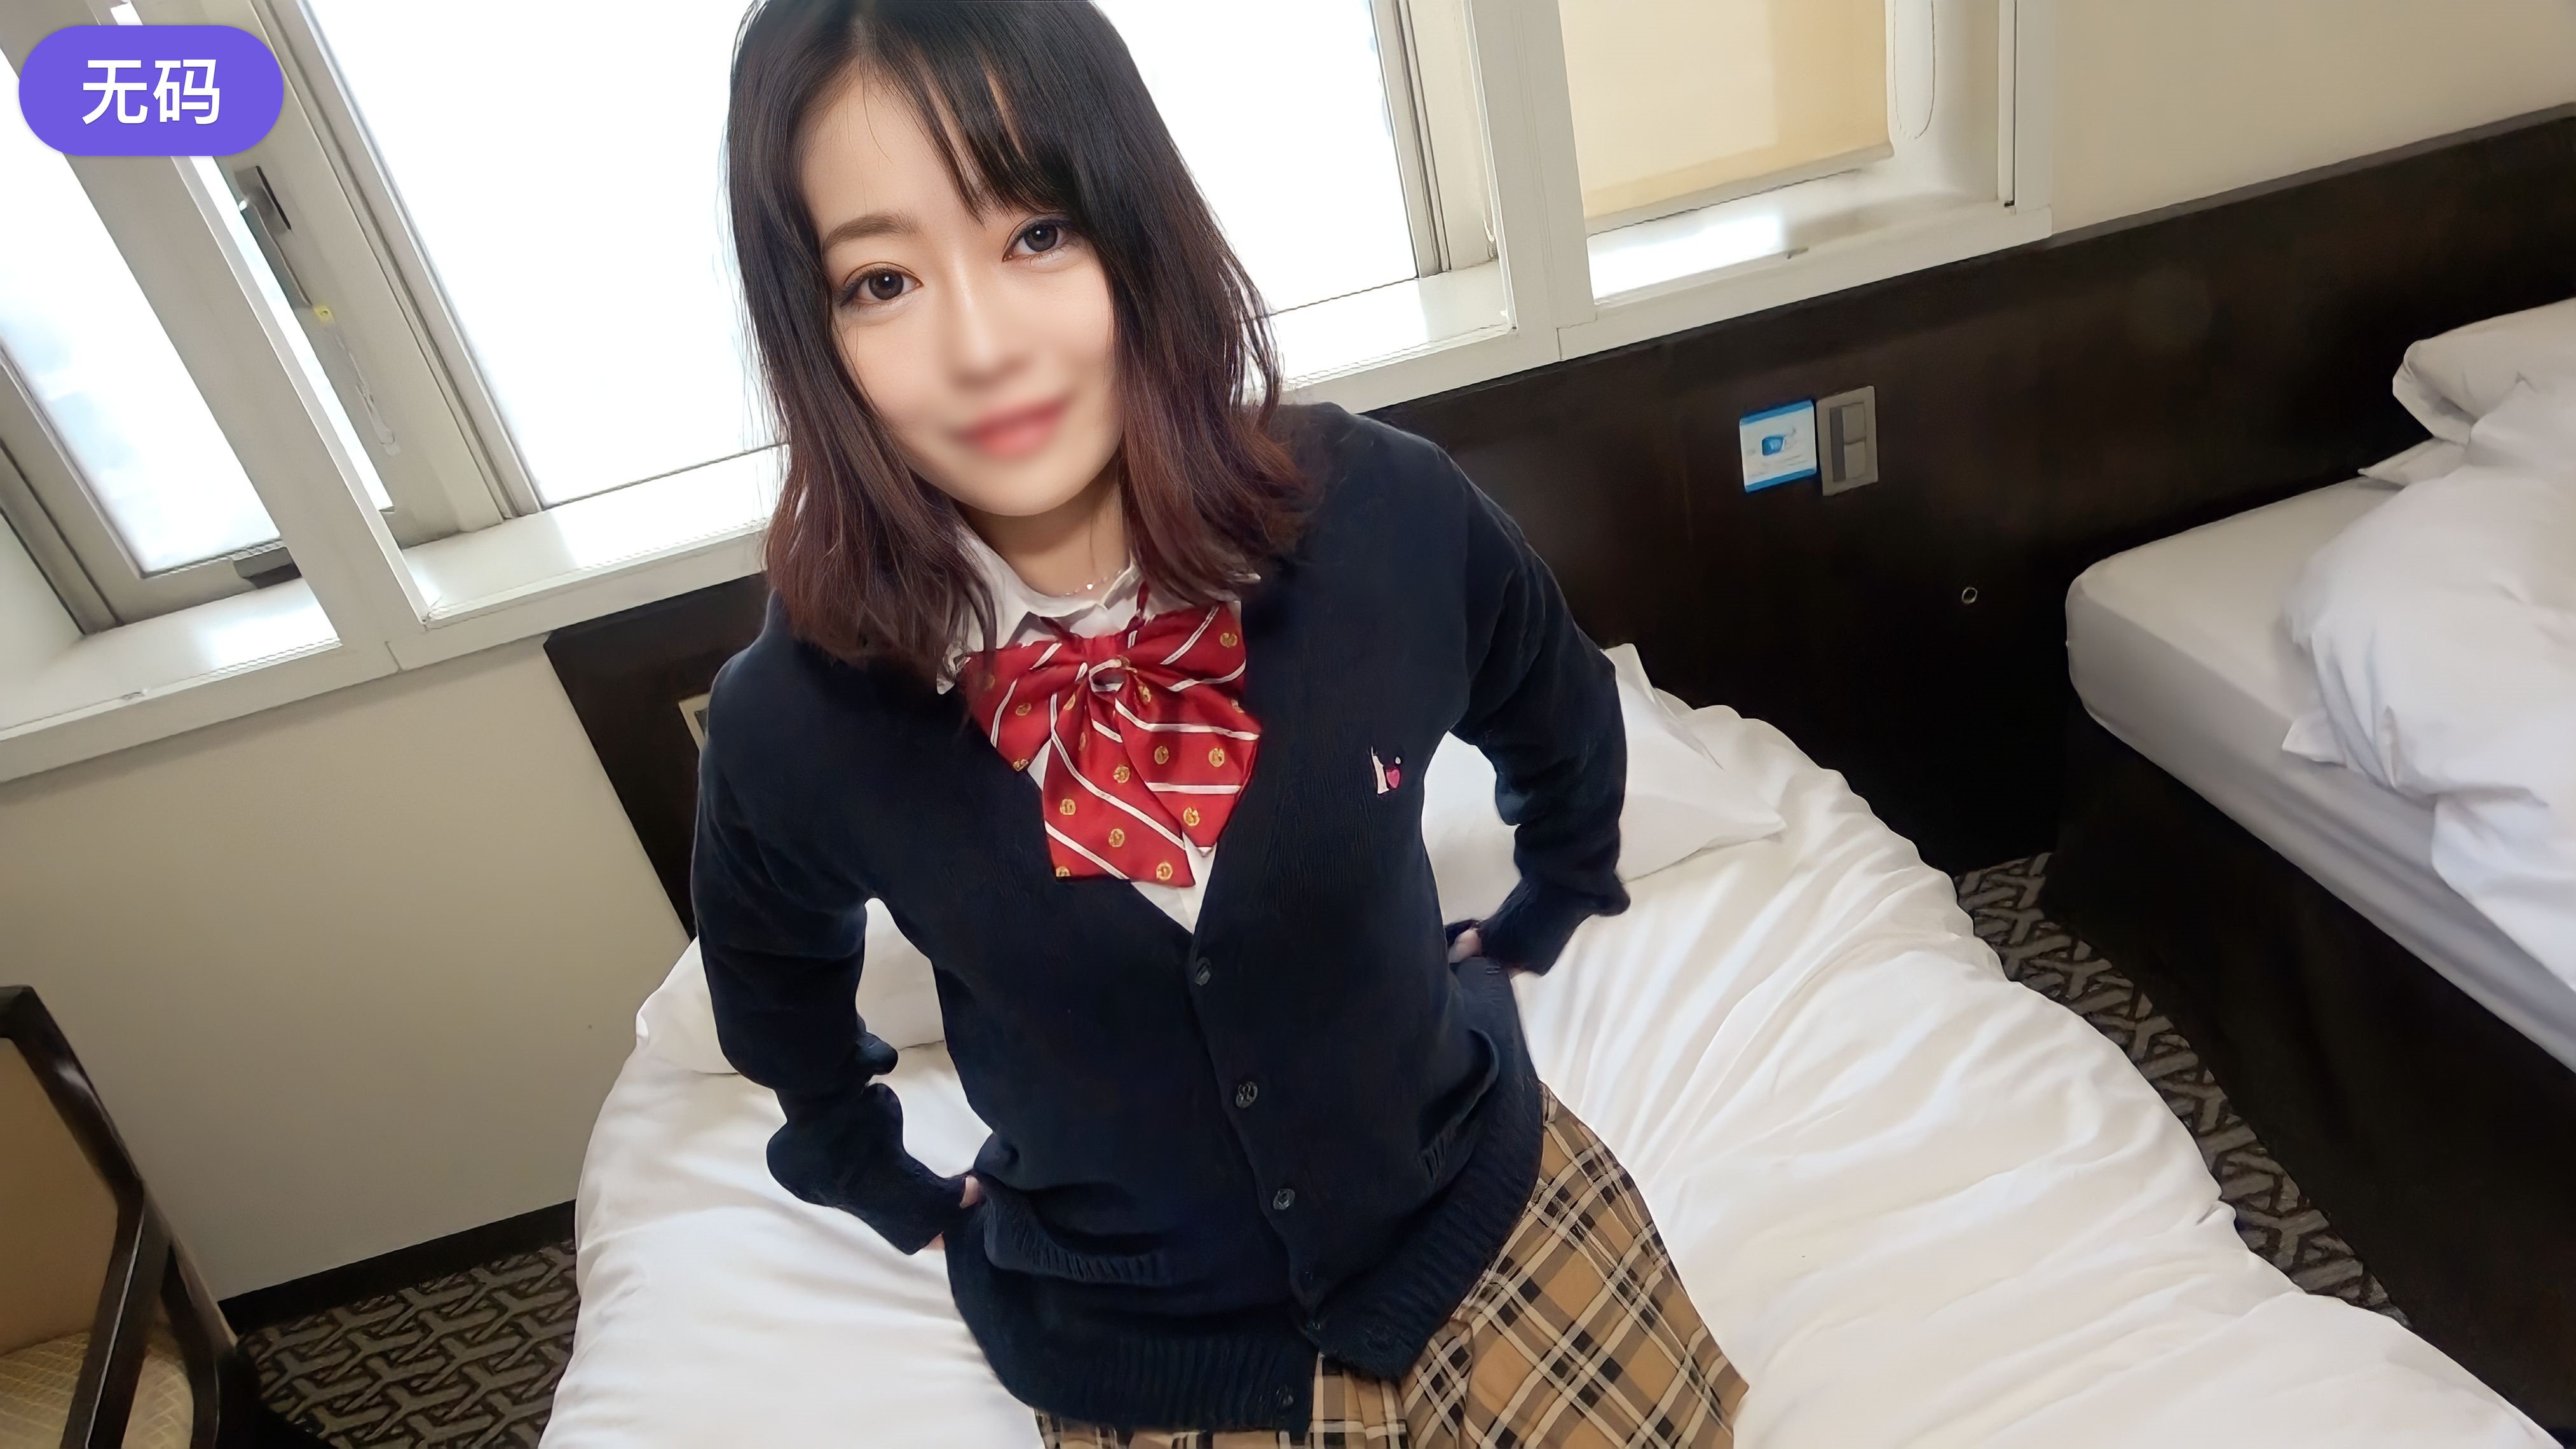 FC2-PPV-3233911 强迫症 Eri-chan（21 岁），一个纯洁无辜的女孩，穿著制服和进行性阴道射精。听一个弱女子的聚会。